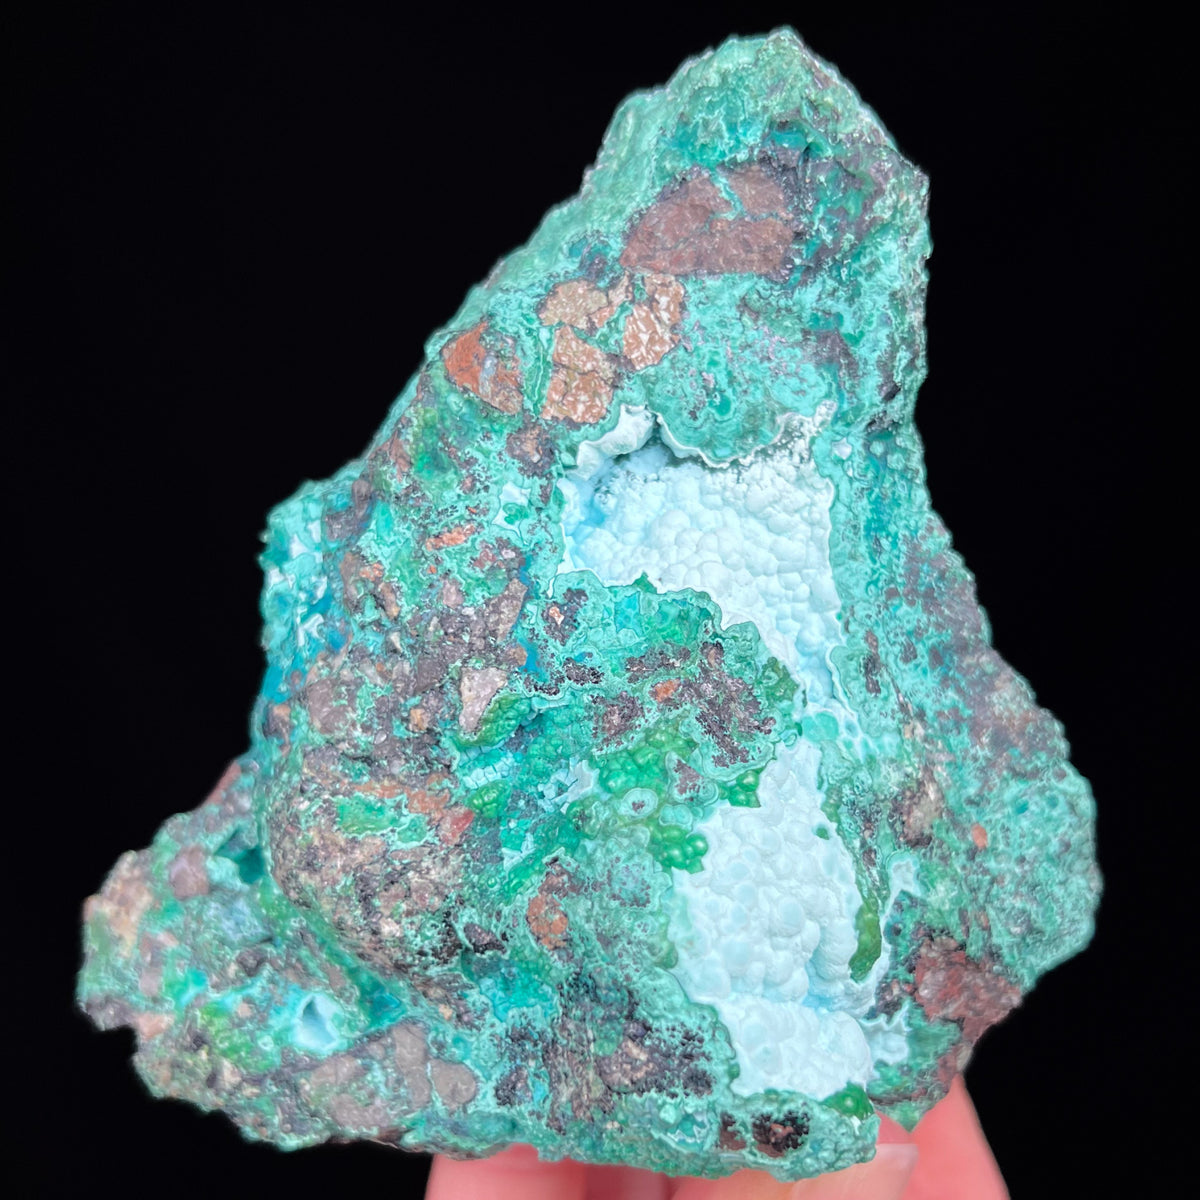 Ray Mine Arizona Mineral Specimen of Malachite and Chrysocolla